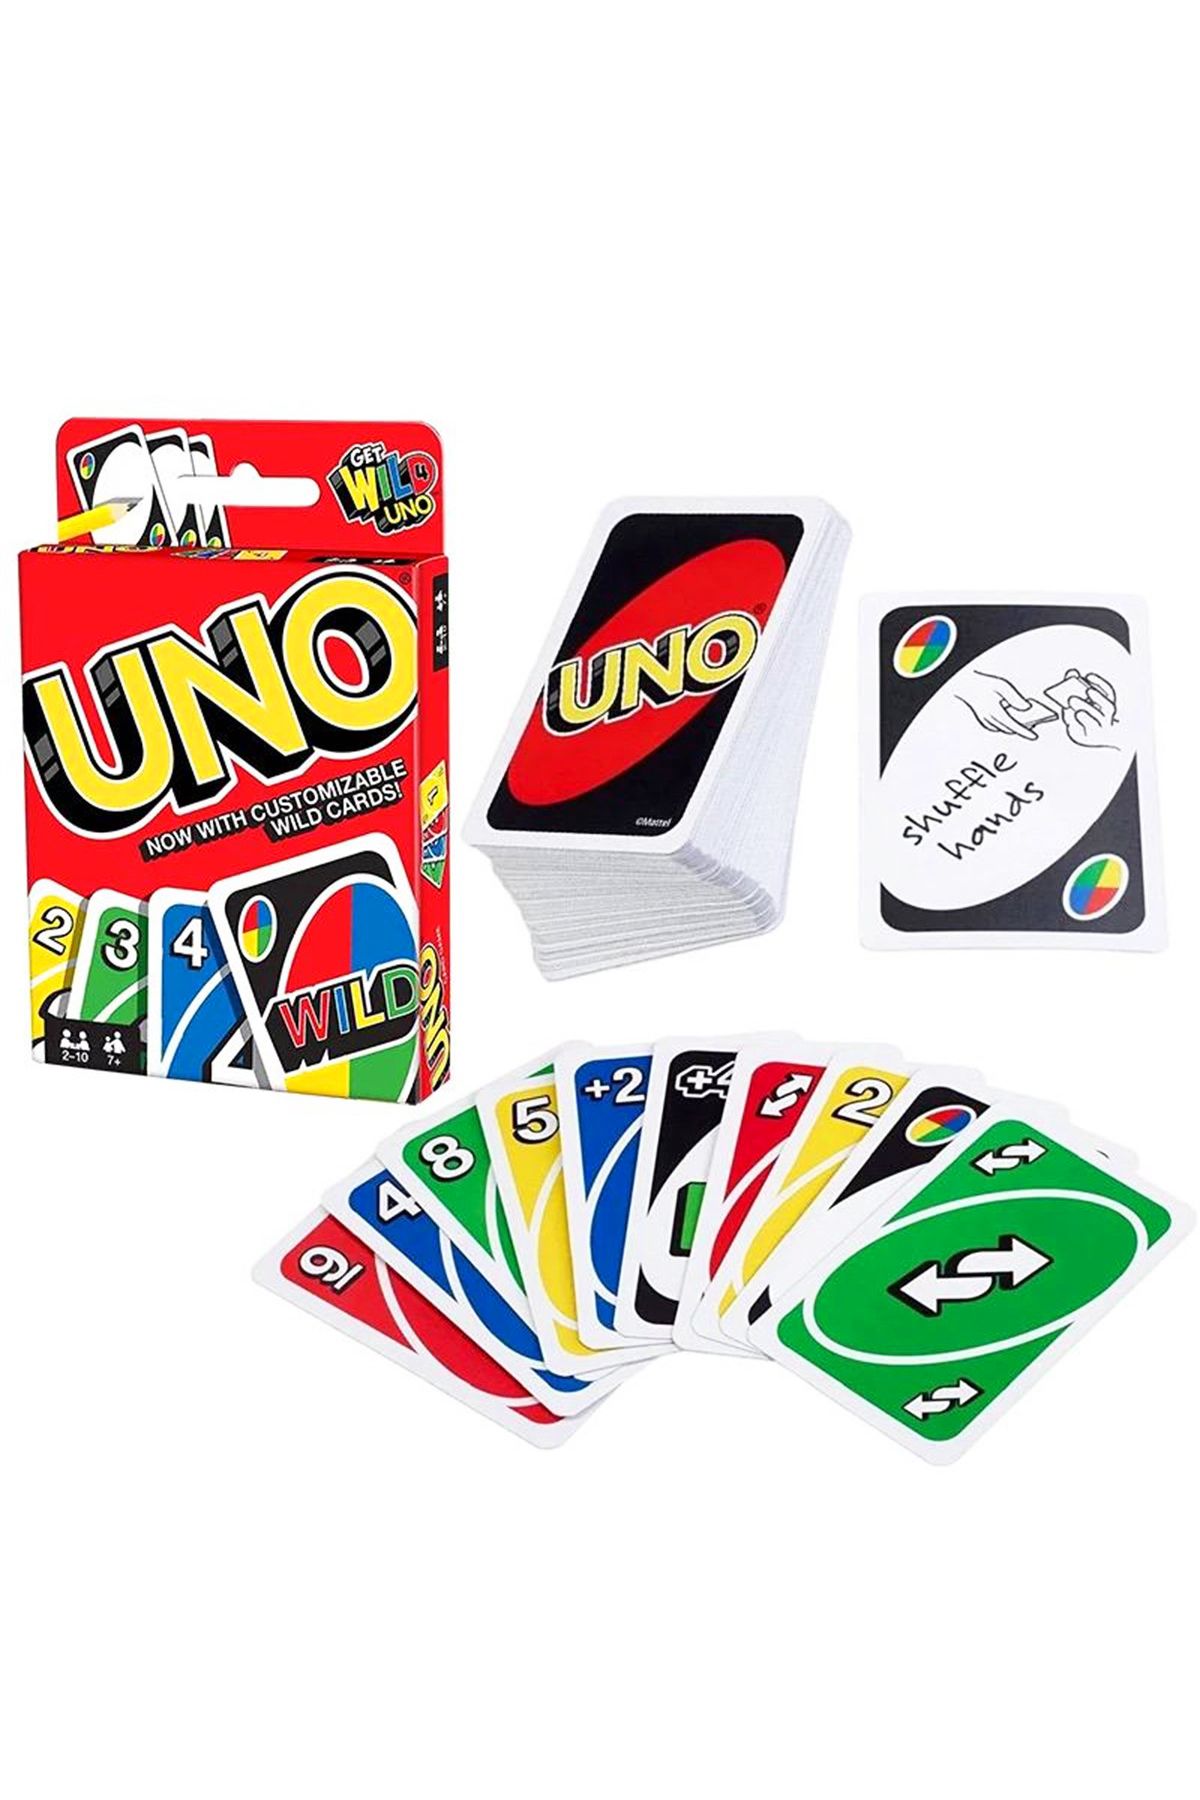 POPKONSOL Uno Oyun Aile Oyunu Set 112 Adet Uno Kart Oyunu